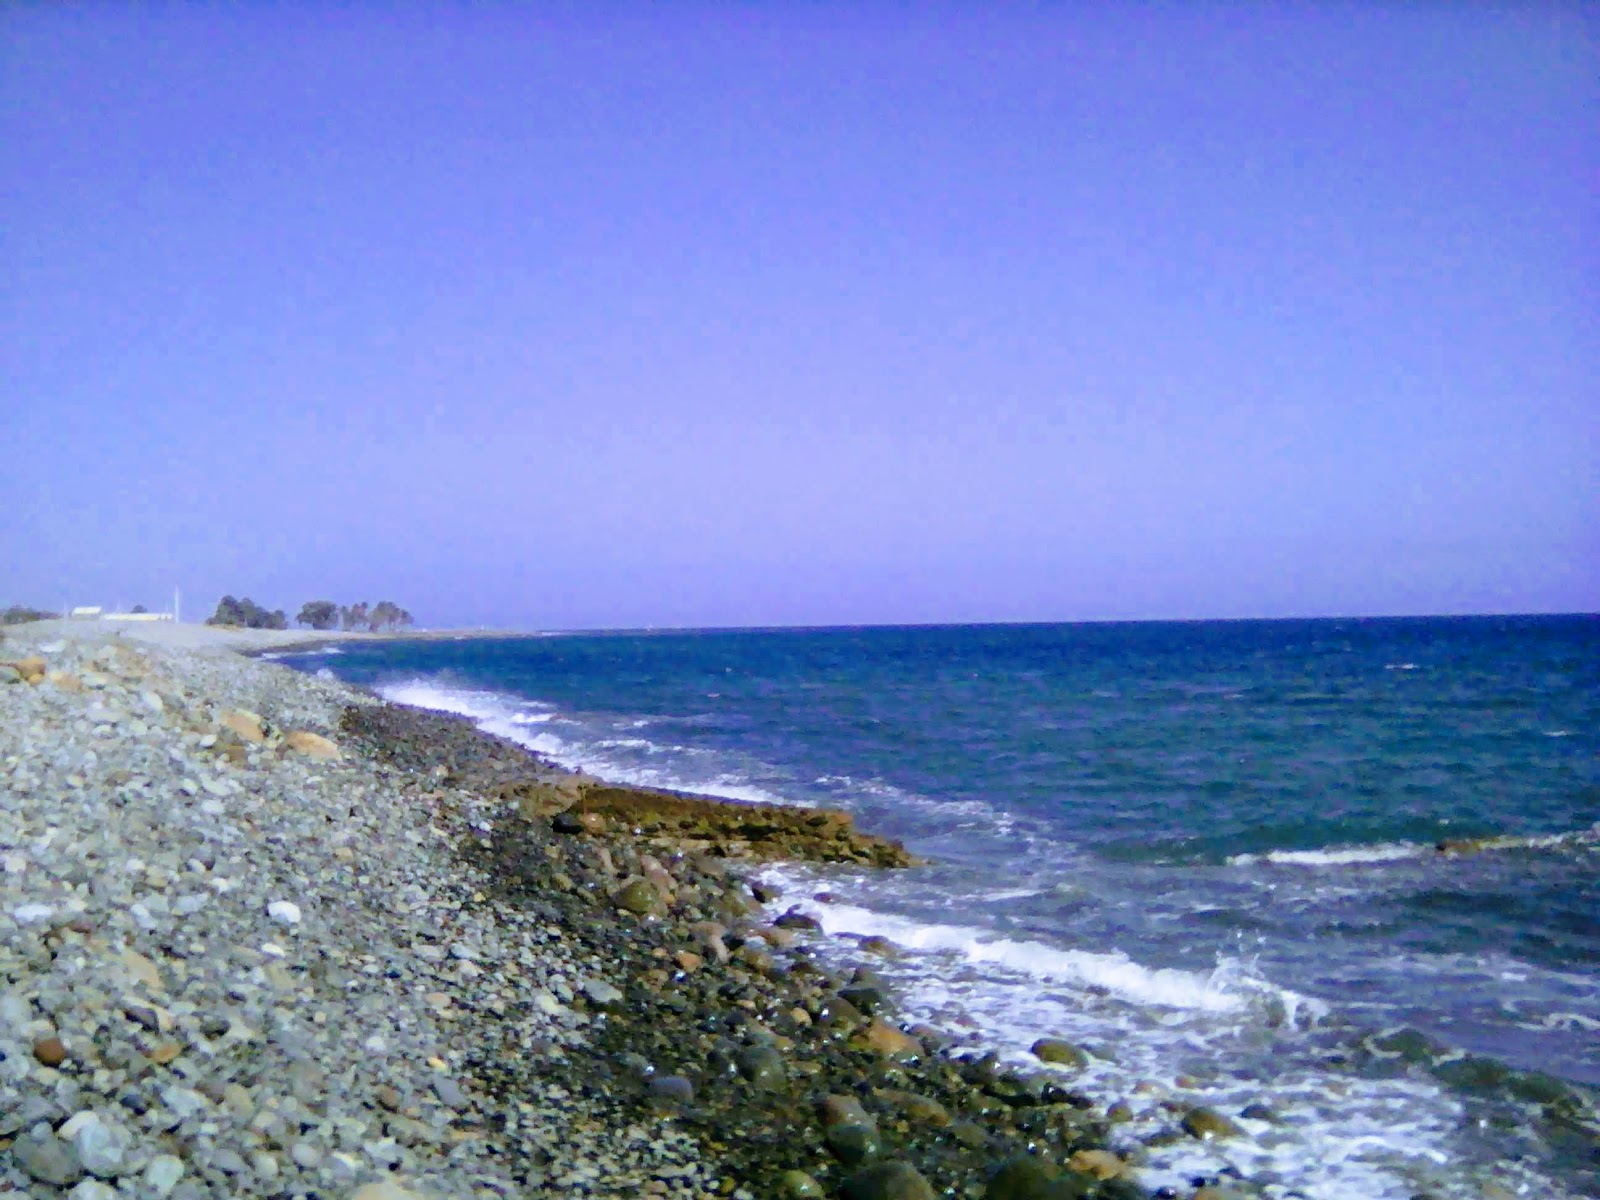 Playa Corral de Espino的照片 带有蓝色纯水表面